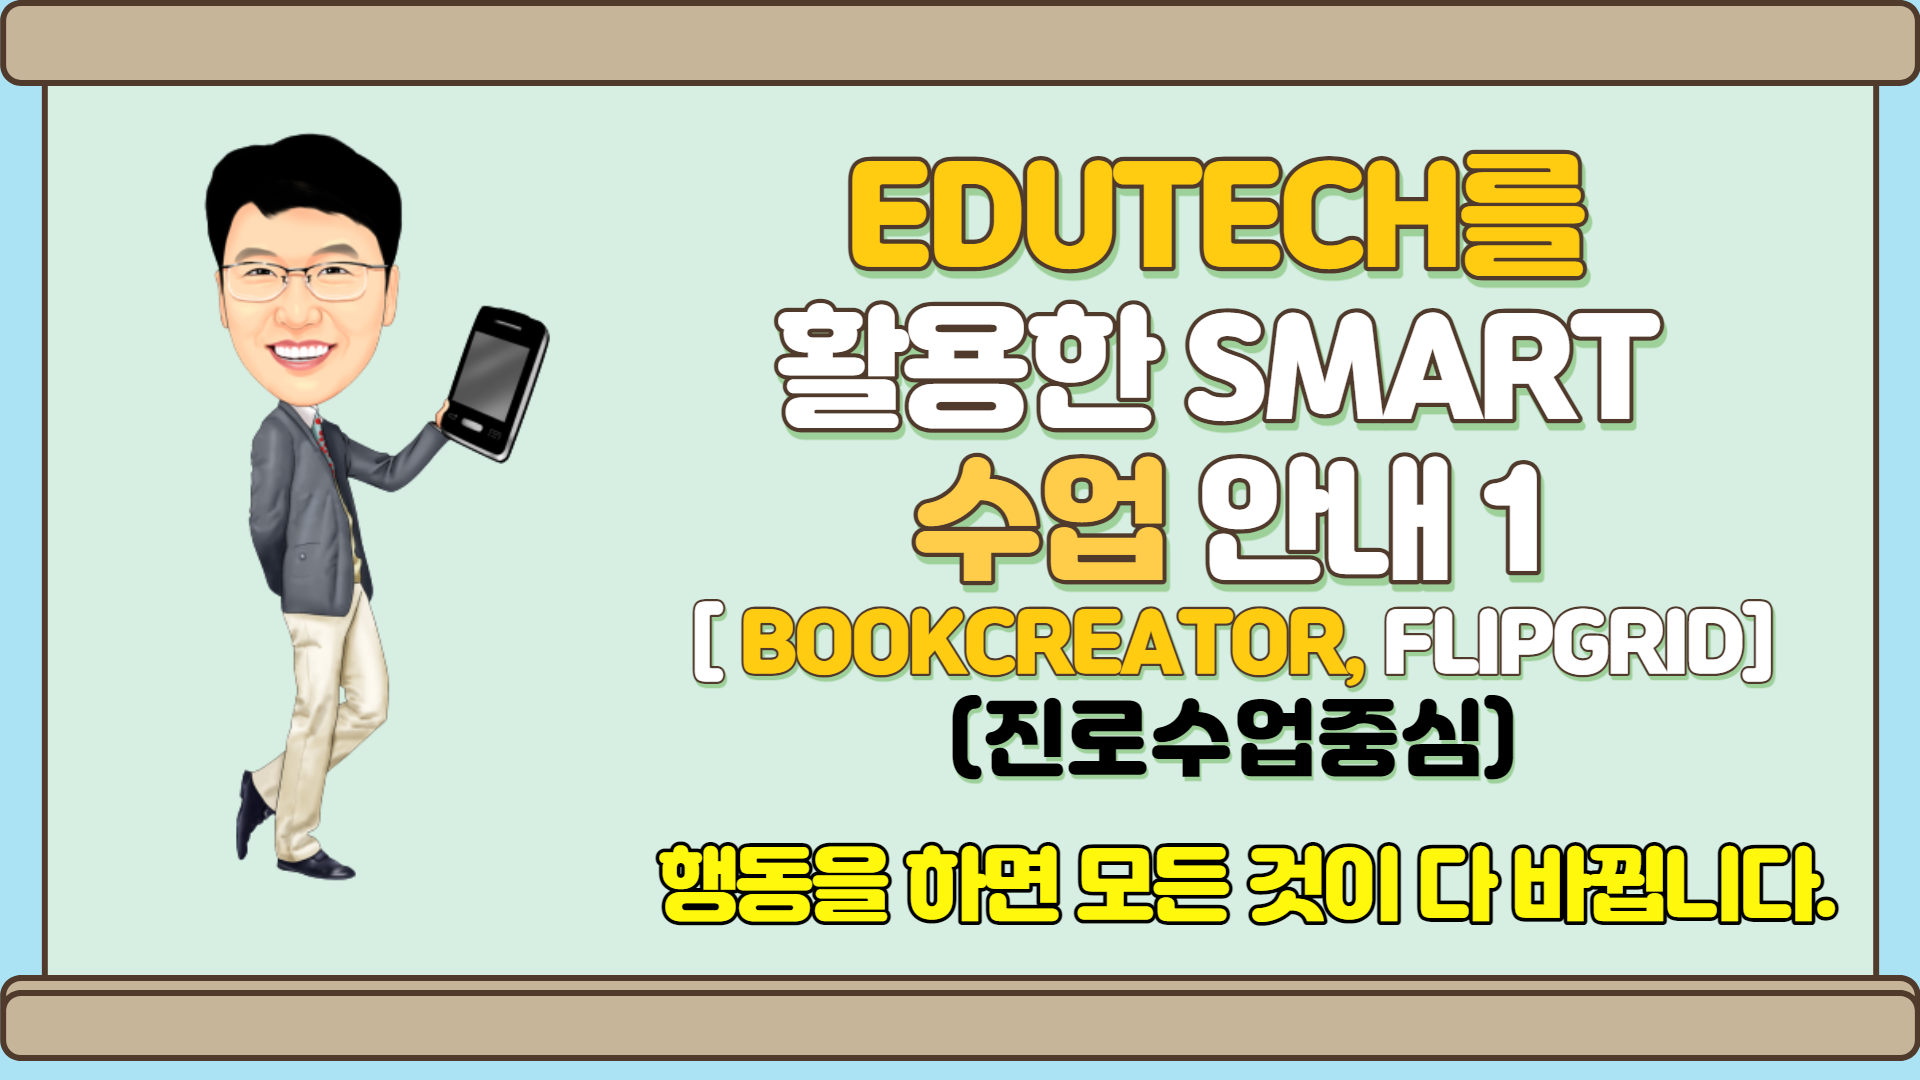 EDUTECH를 활용한 smart 수업 방법 안내 1(진로수업을 중심으로)(bookcreator, EMAZE) 19:00~20:50